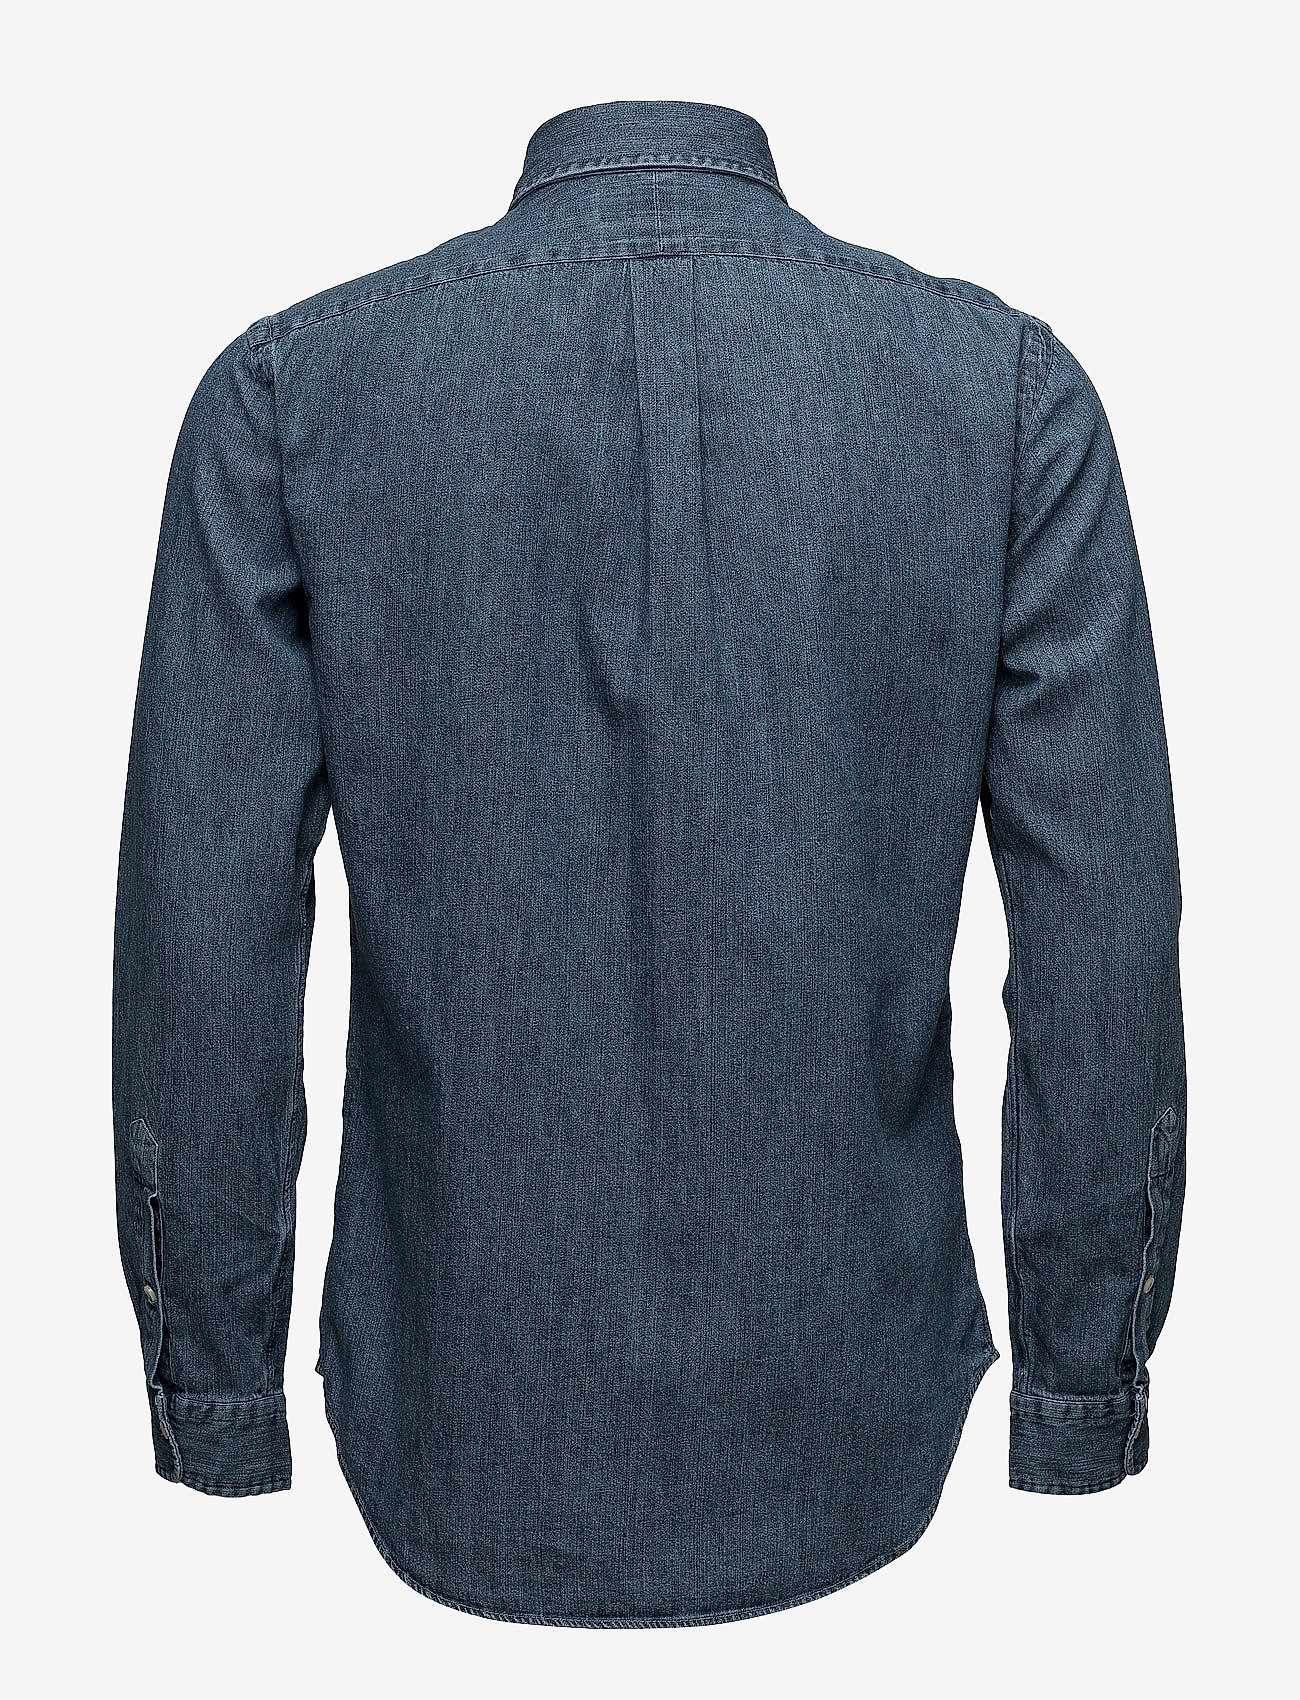 Polo Ralph Lauren - Slim Fit Chambray Shirt - dark wash - 1